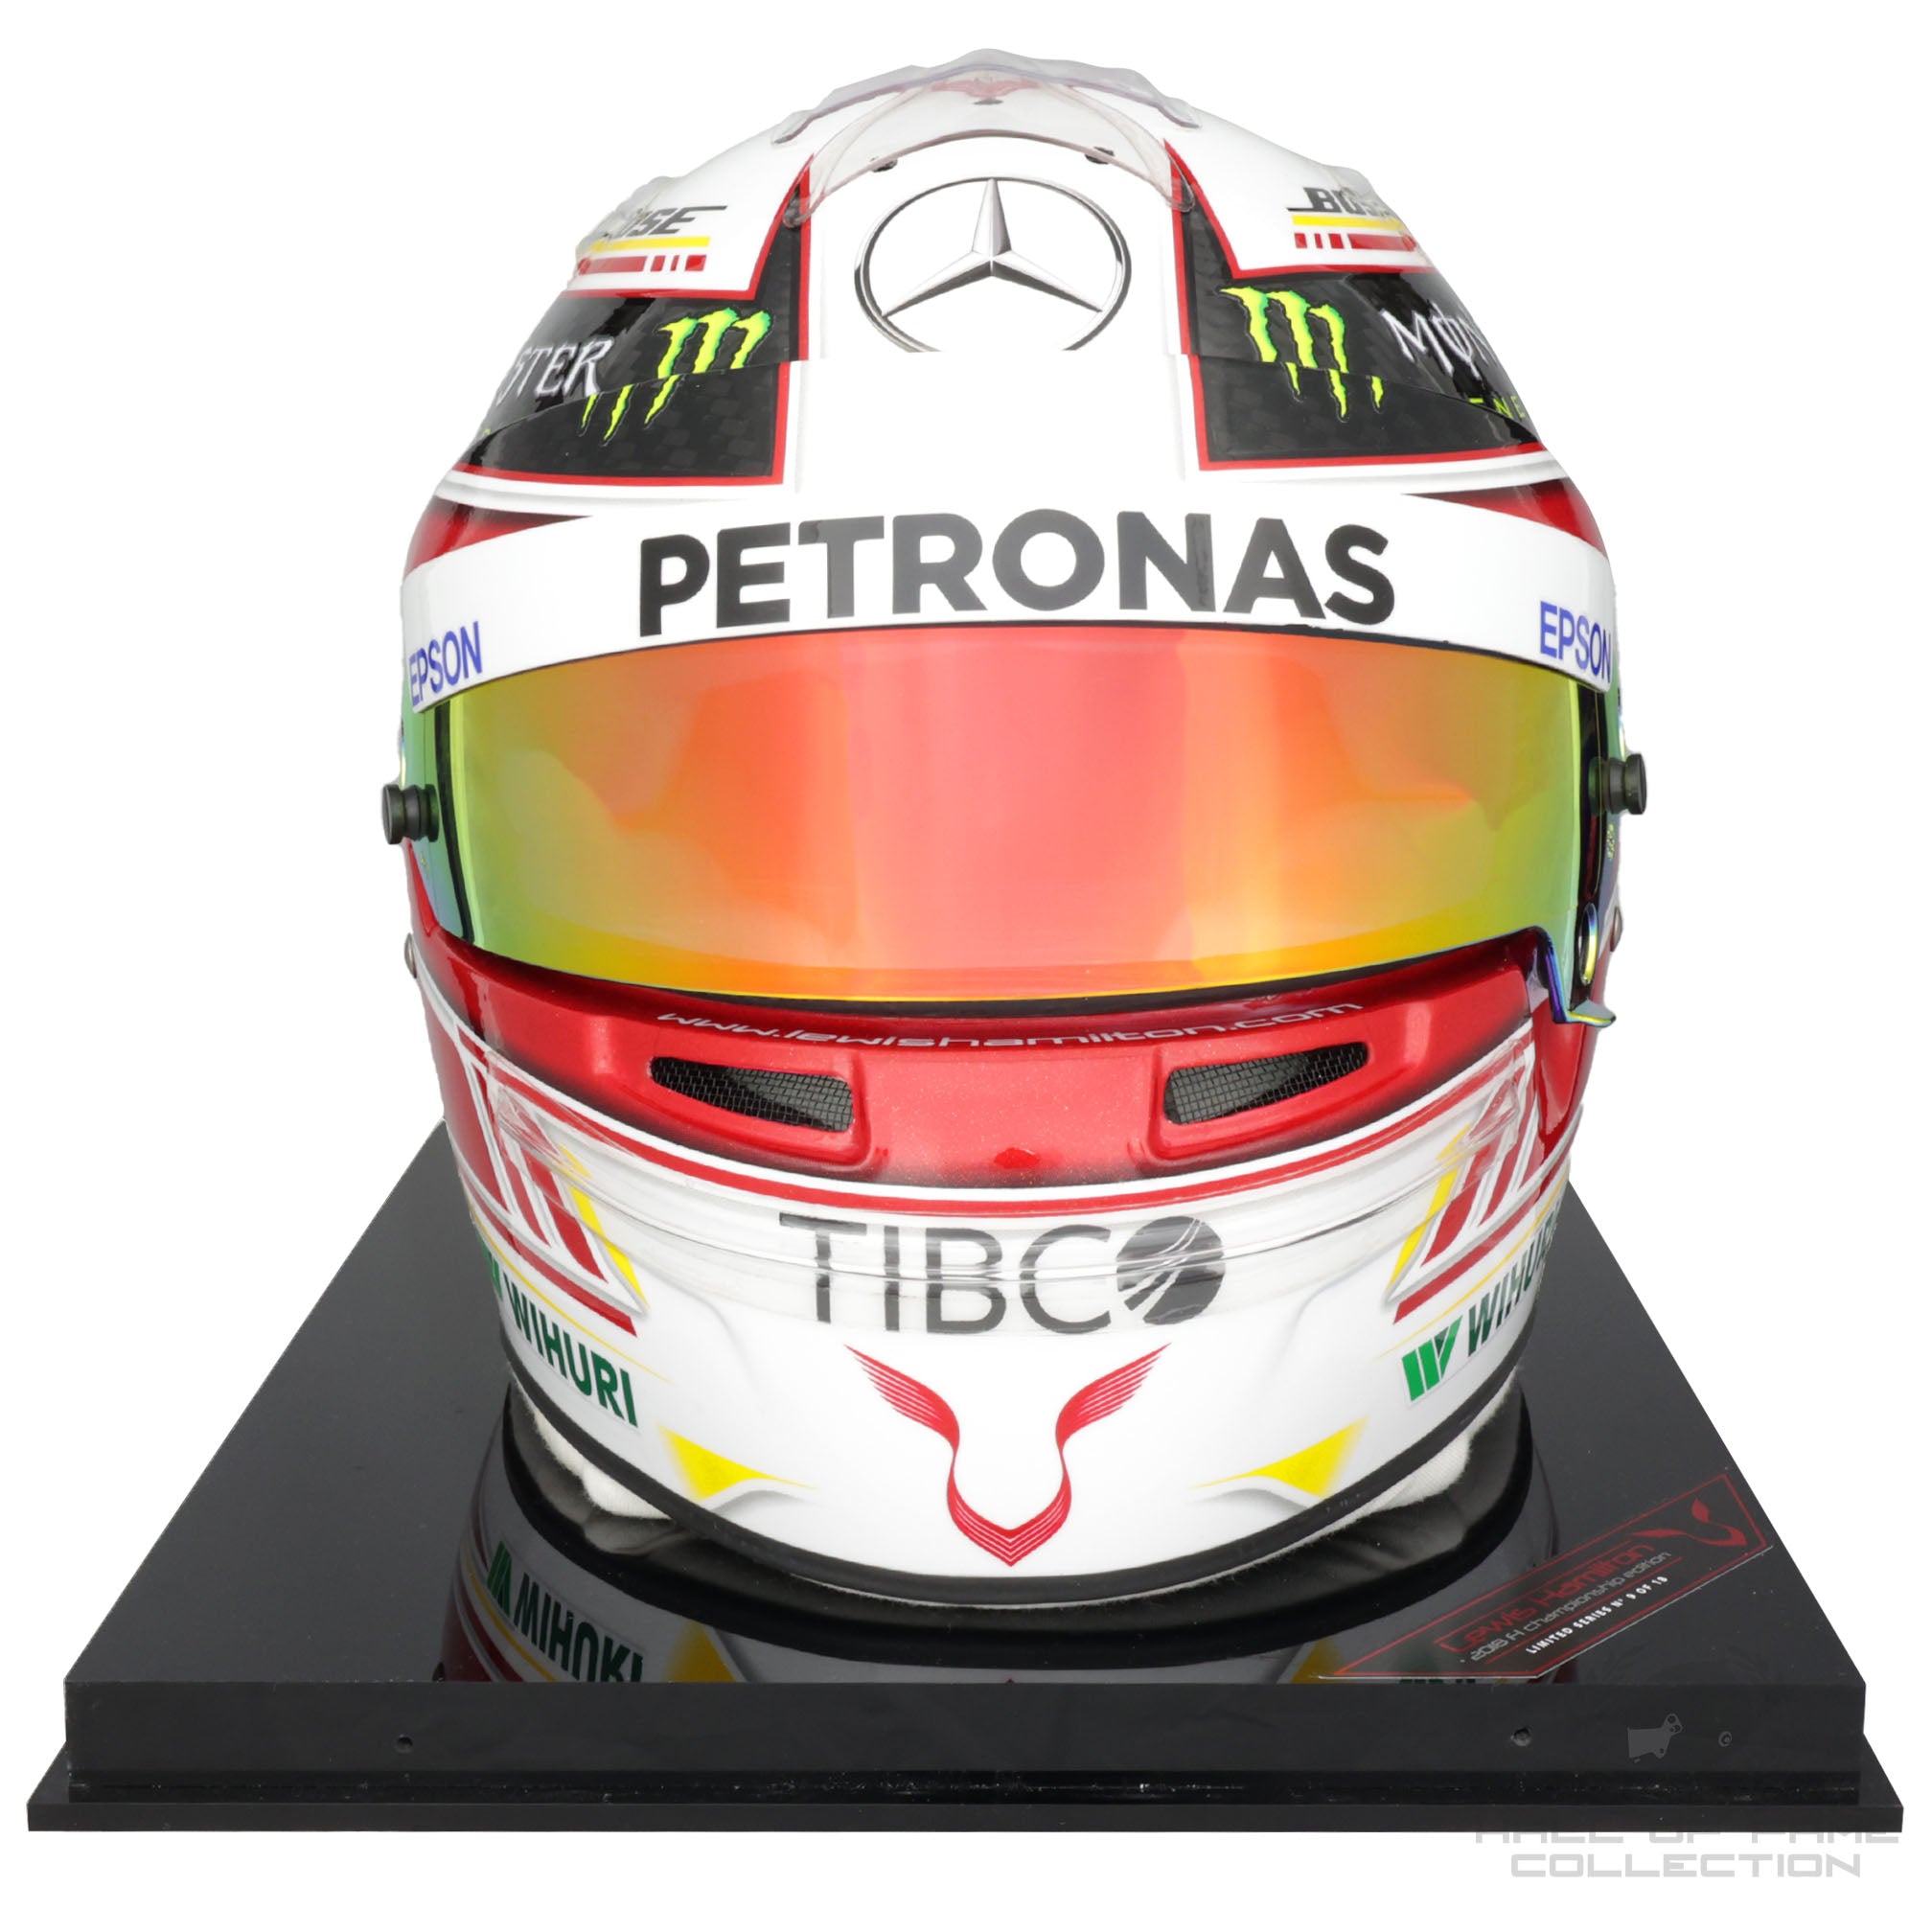 2018 Lewis Hamilton Limited Edition 9/18 5th World Championship Replica Mercedes F1 Helmet